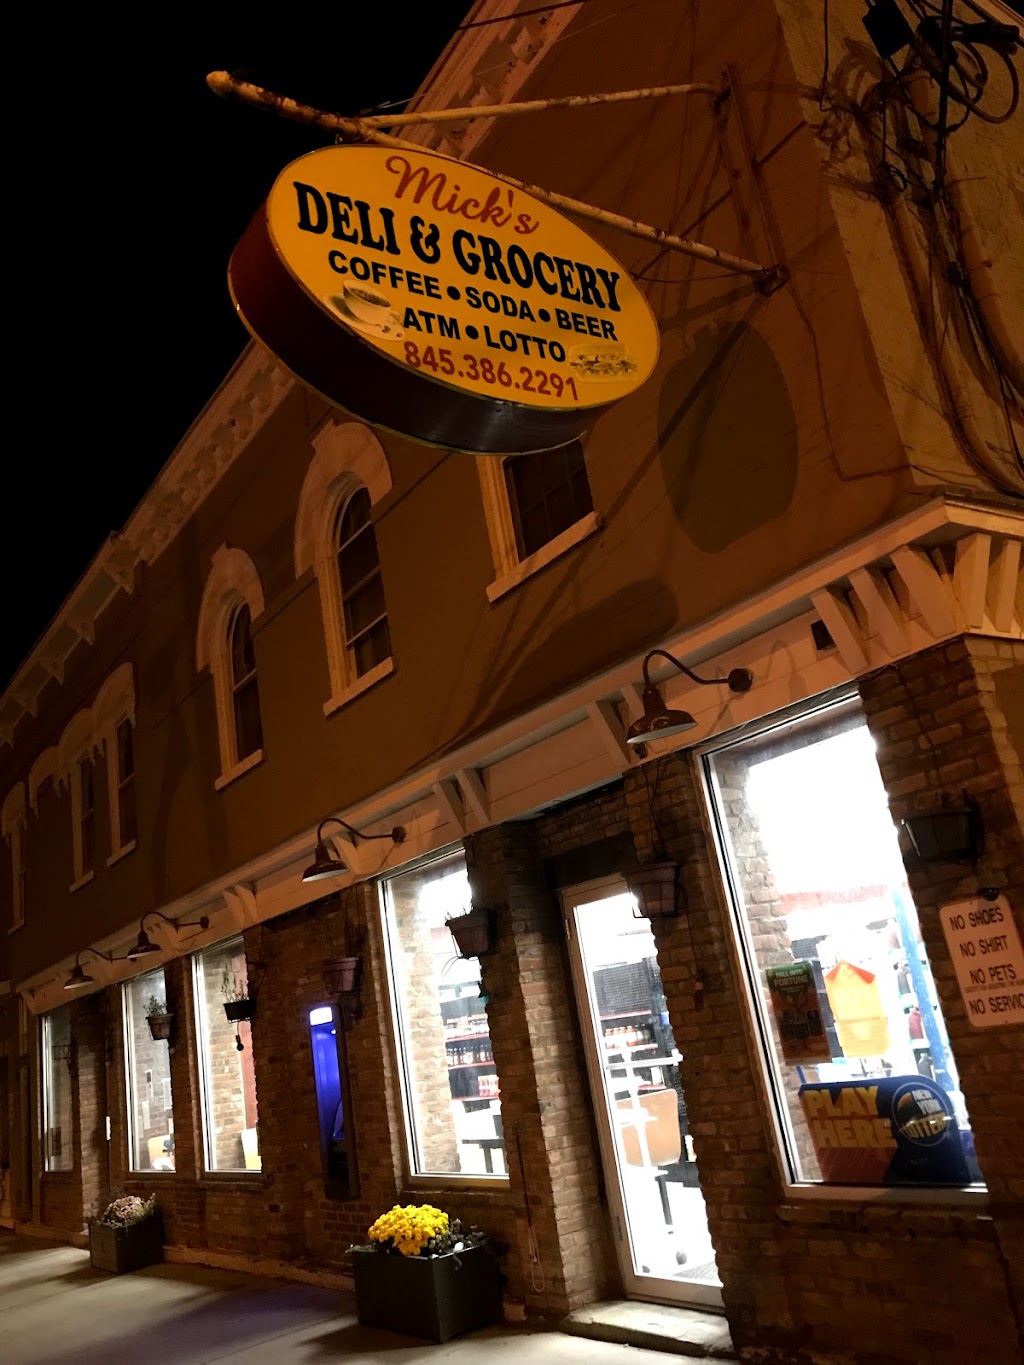 Micks Deli & Grocery | 16 Main St, Otisville, NY 10963 | Phone: (845) 386-2291